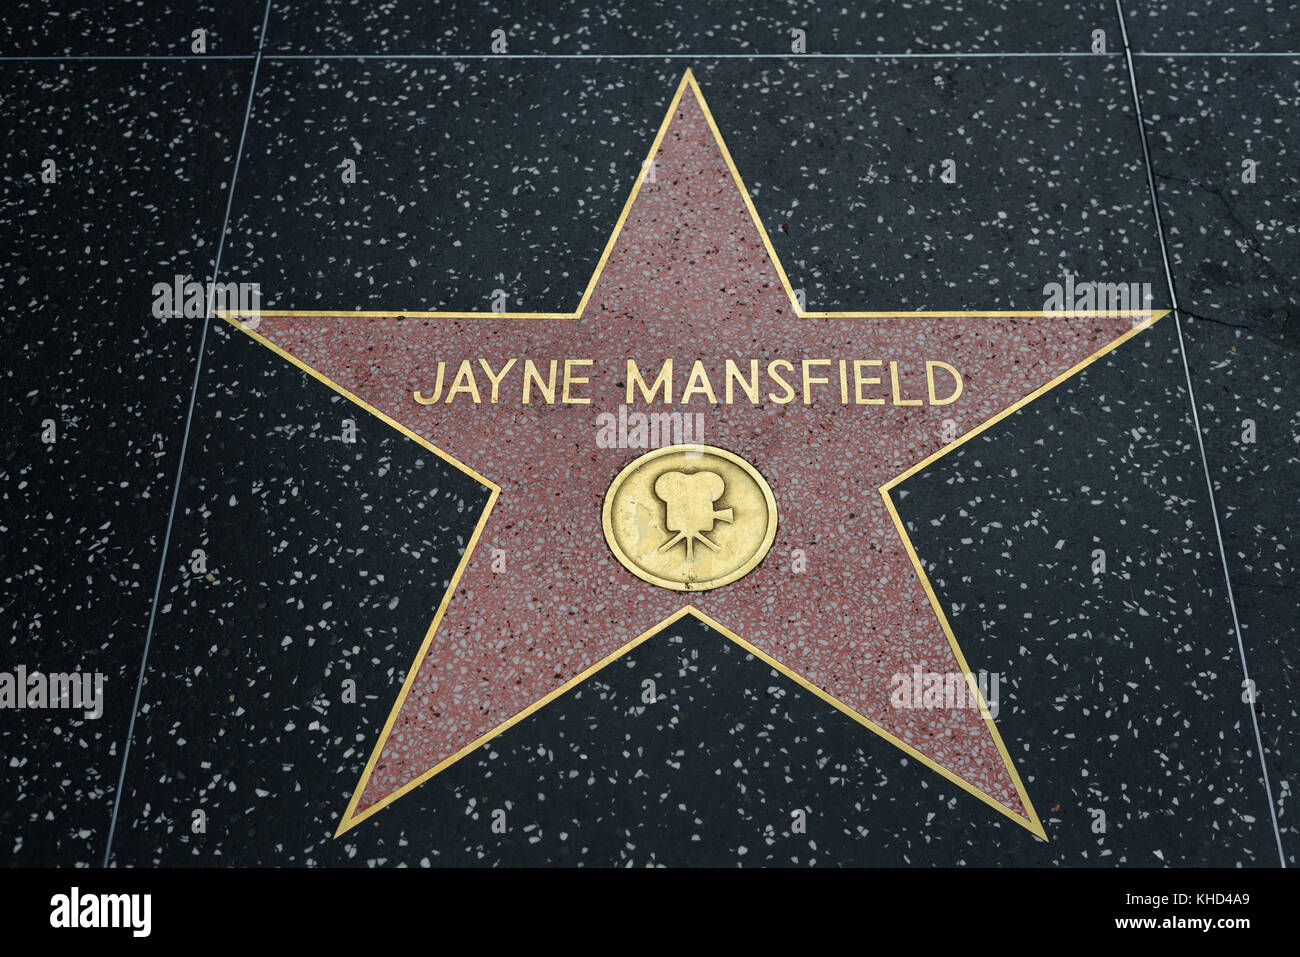 HOLLYWOOD, CA - DEZEMBER 06: Jayne Mansfield Star auf dem Hollywood Walk of Fame in Hollywood, Kalifornien am 6. Dezember 2016. Stockfoto